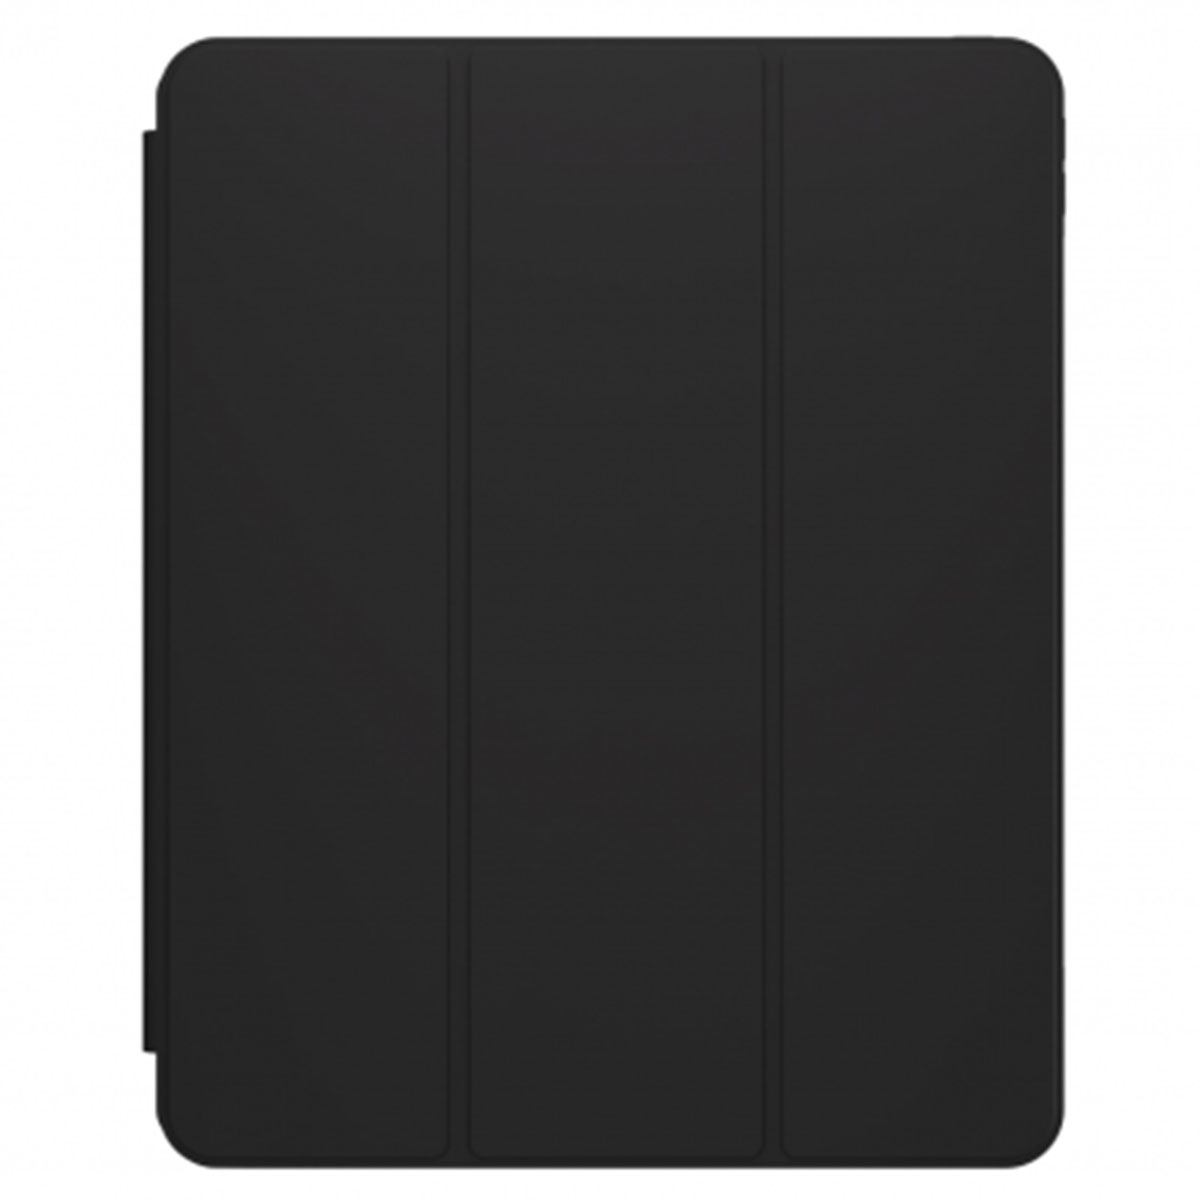 Husa de protectie tableta Next One pentru Apple iPad 12.9 inch, Suport Pen, Protectie 360, Plastic si microfiba interior, Black